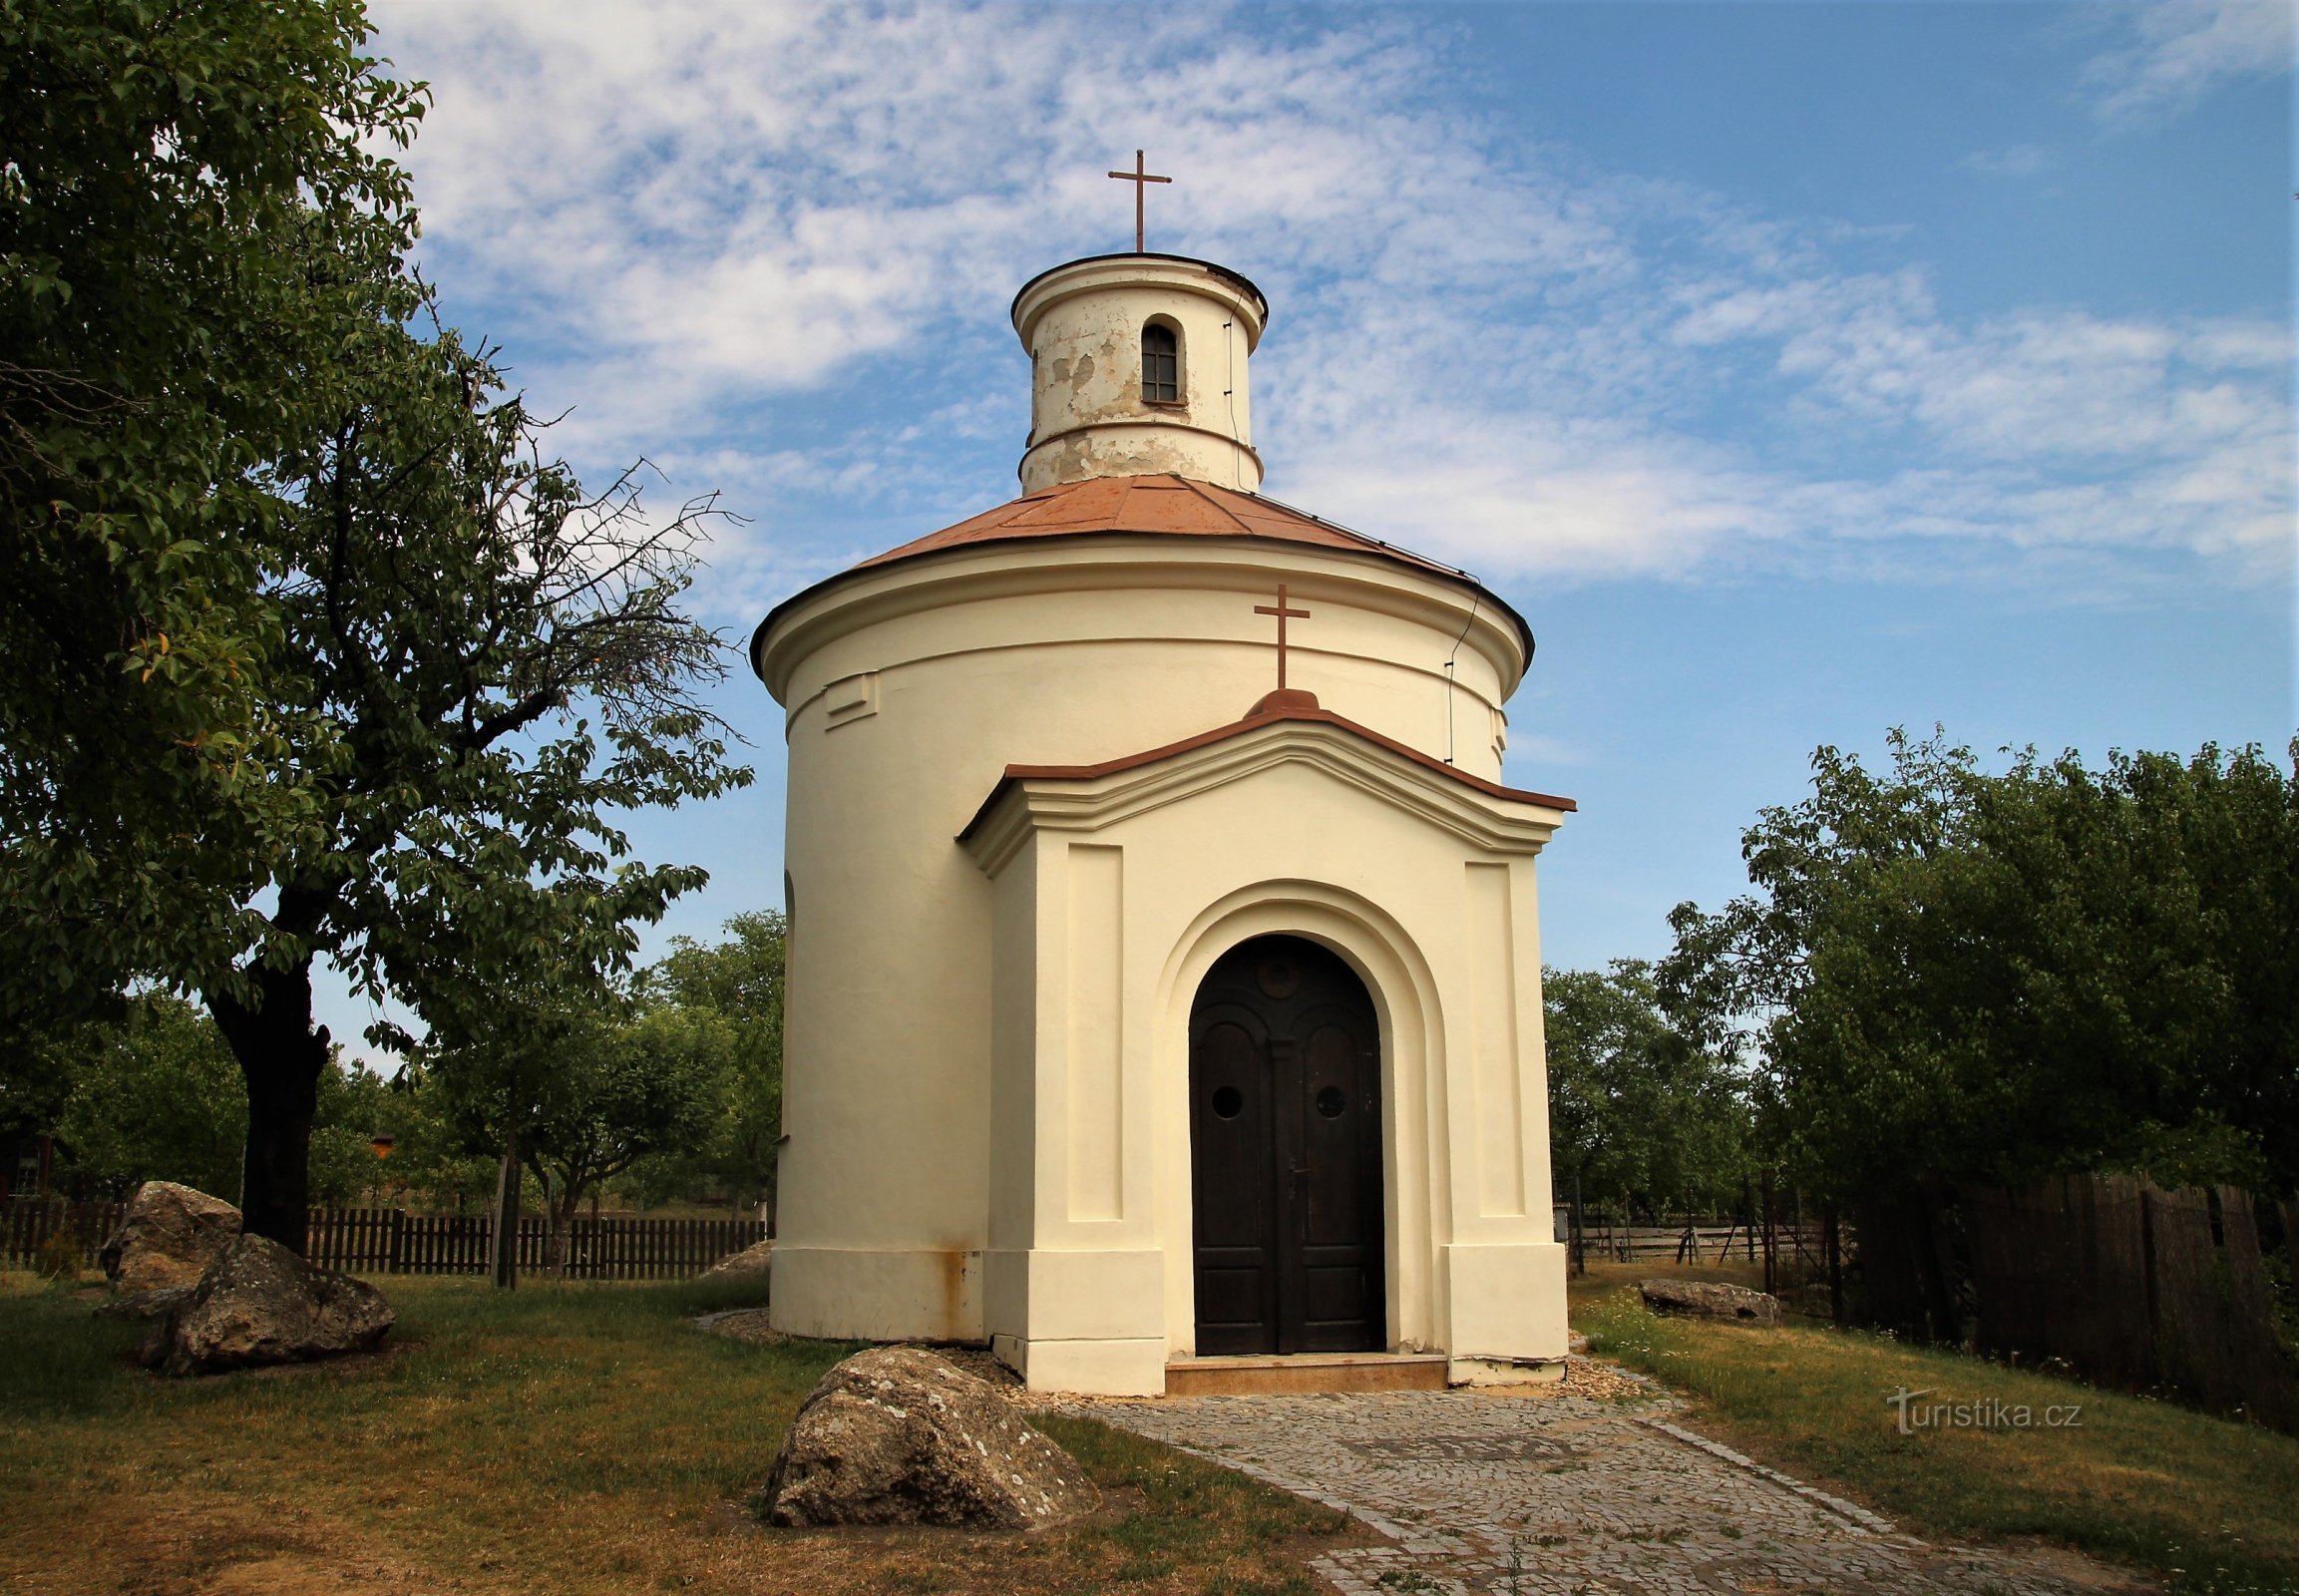 Újezd ​​​​cerca de Brno - capilla de St. Antonio de Padua